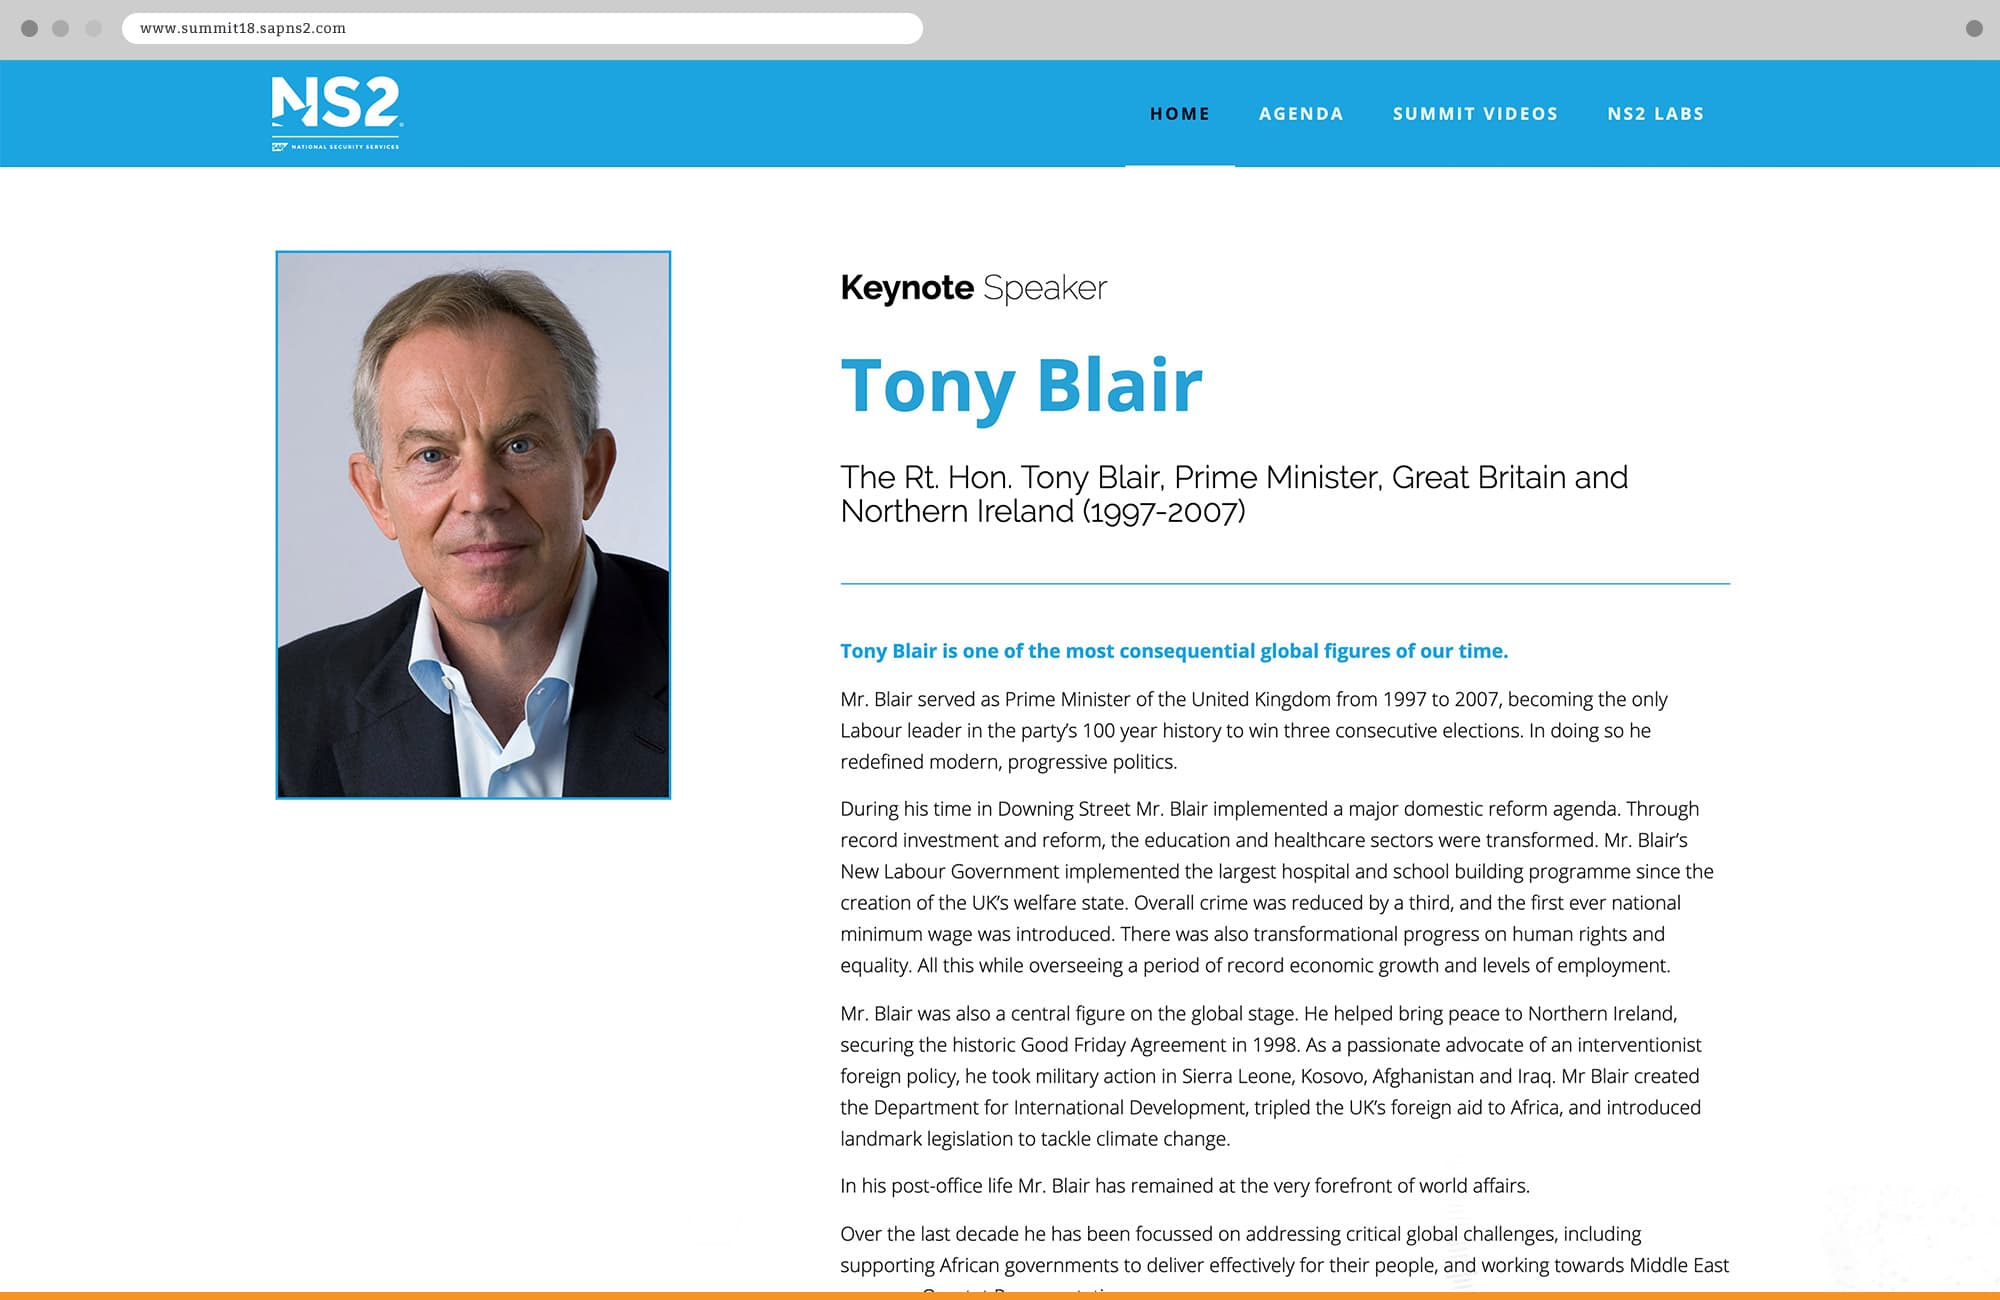 Punch - NS2 Summit Website with Keynote Speaker Tony Blair